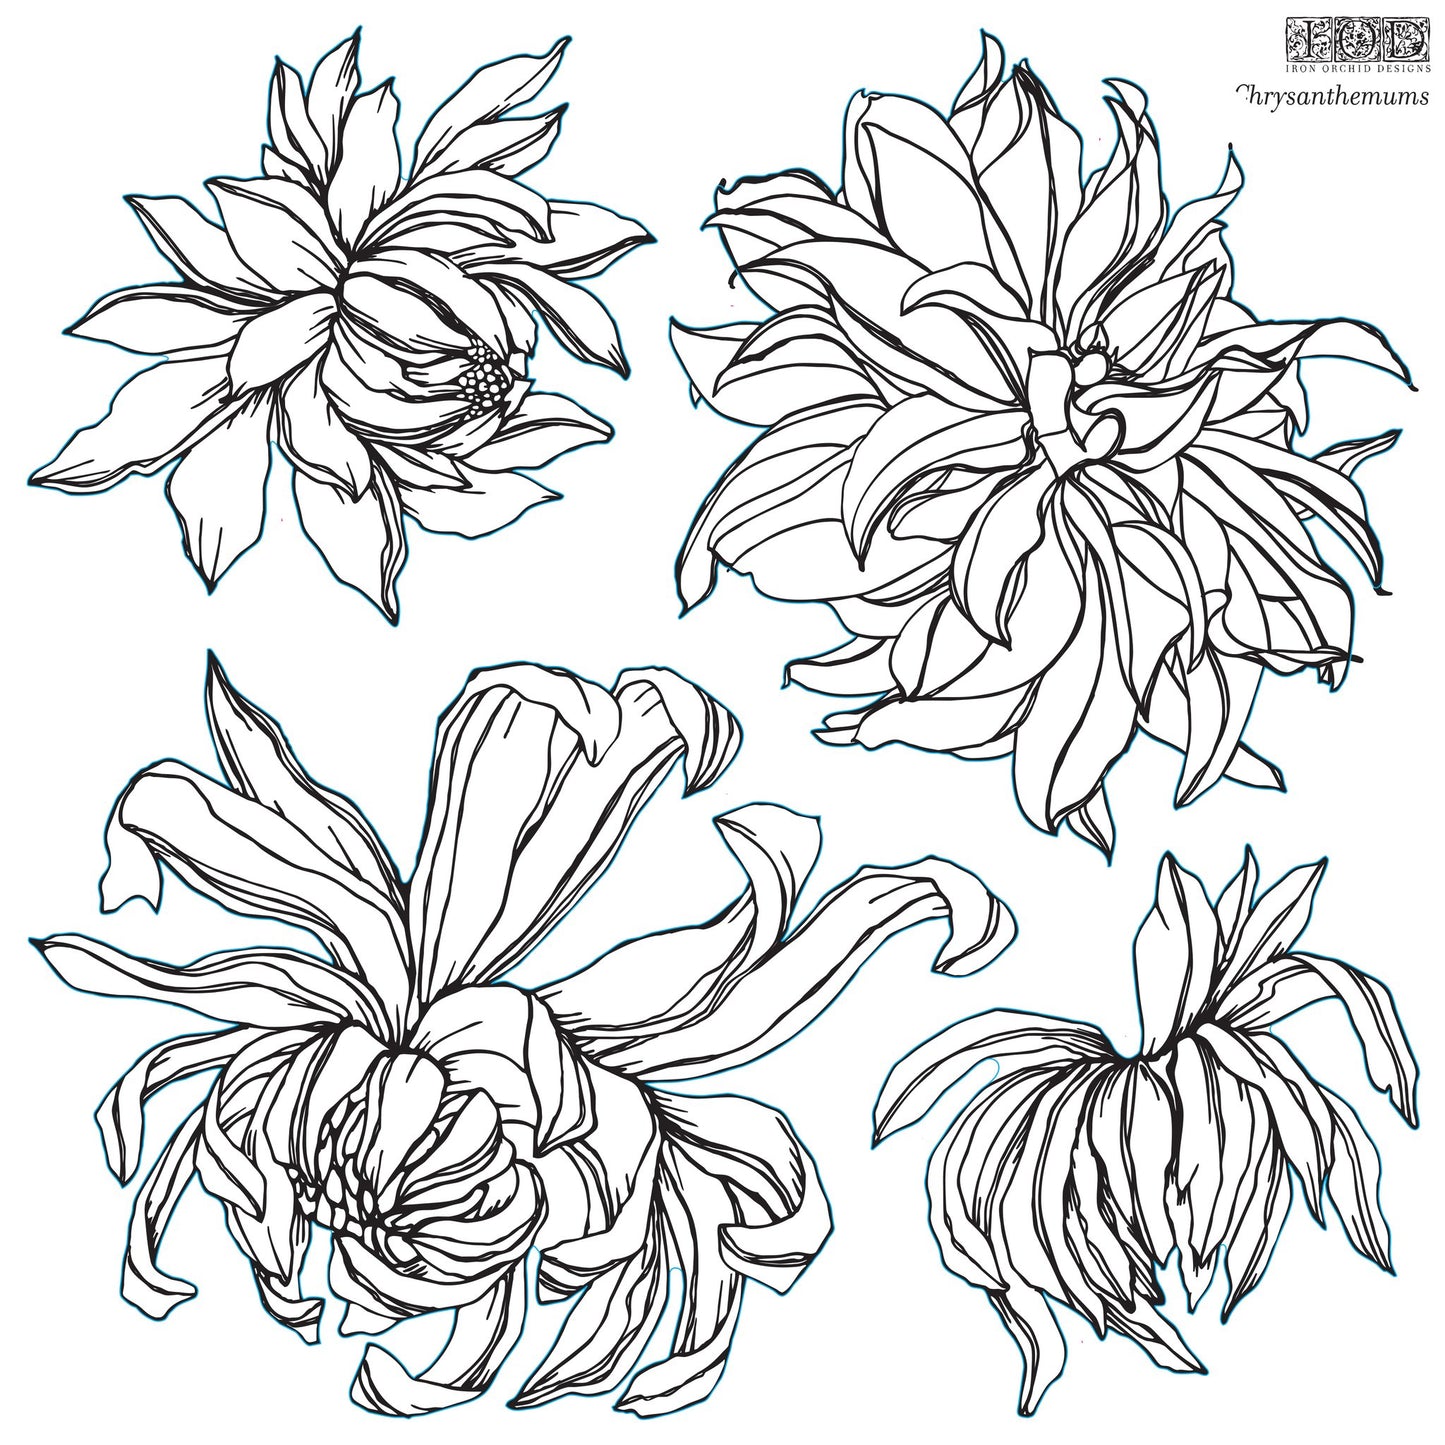 Chrysanthemum decor stamp- IOD